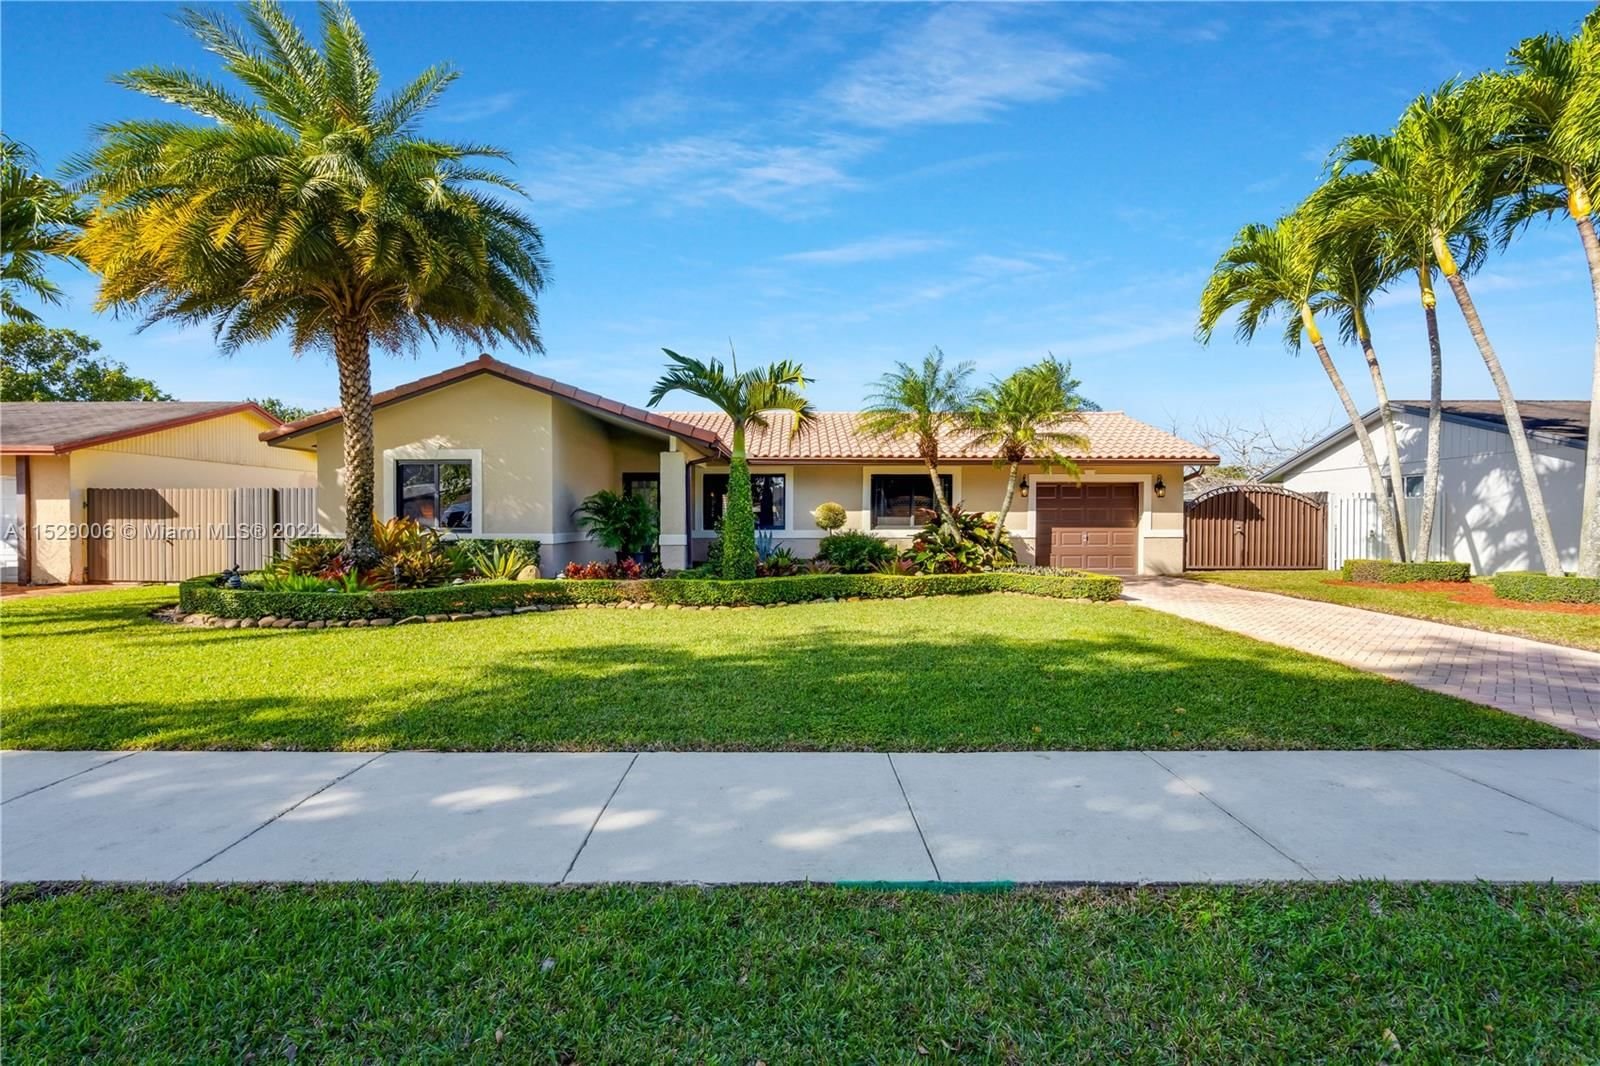 Real estate property located at 4620 133rd Ave, Miami-Dade County, SAN SEBASTIAN UNIT NO 5, Miami, FL